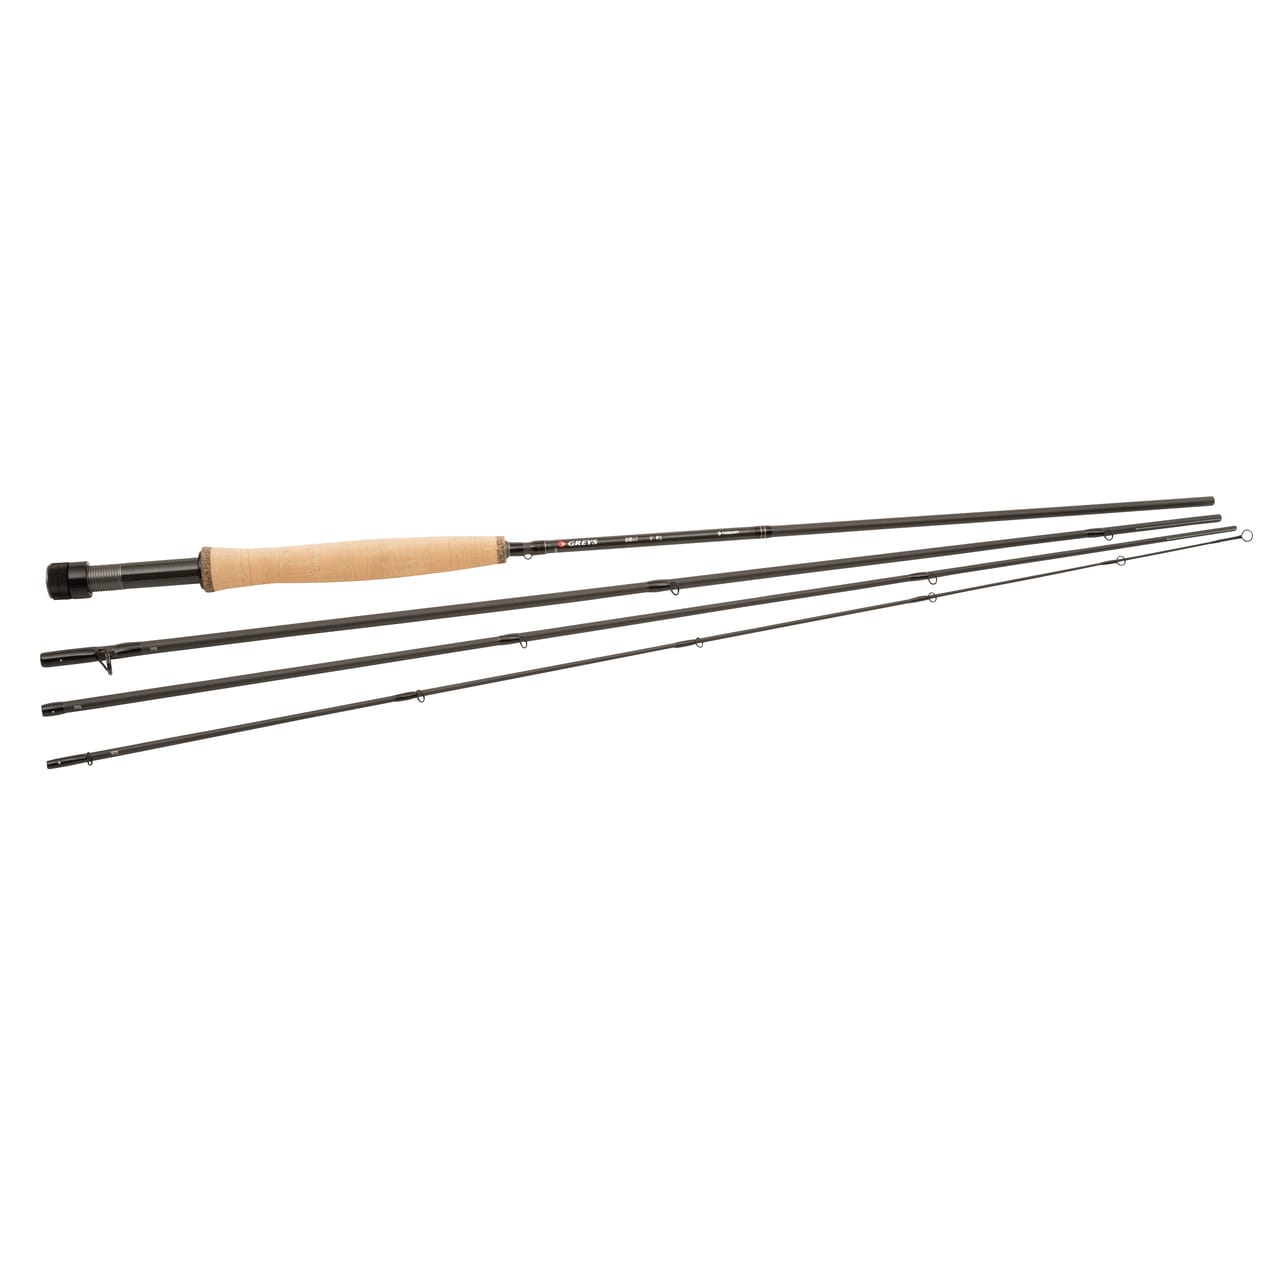 Greys GR60 Single Handed Fly Fishing Rod All Sizes Full Range Game Fly Fishing 